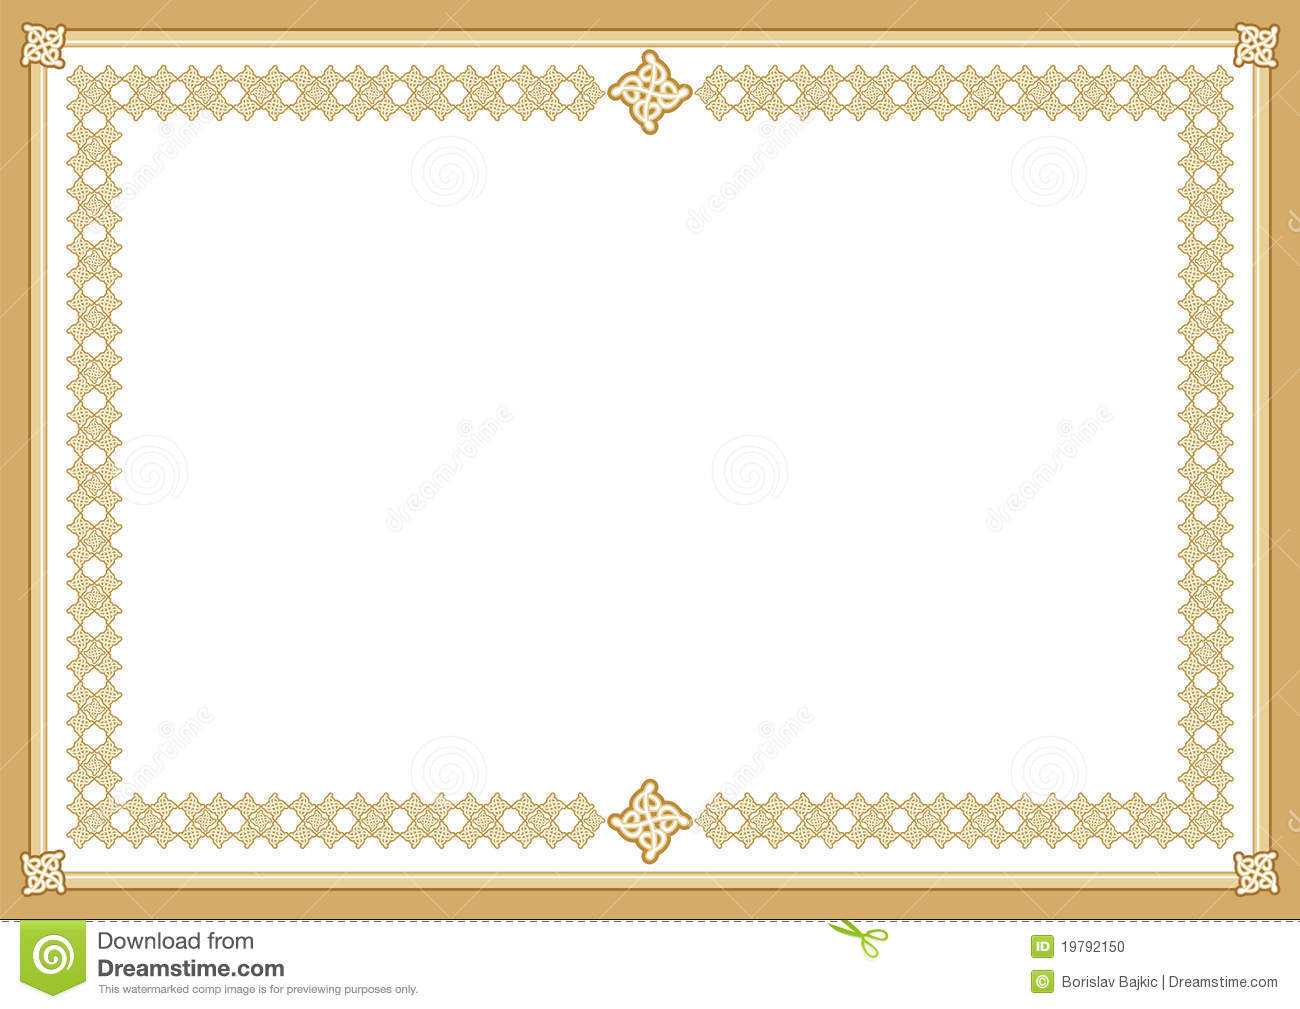 Certificate Stock Vector. Illustration Of Award, Blank In Award Certificate Border Template